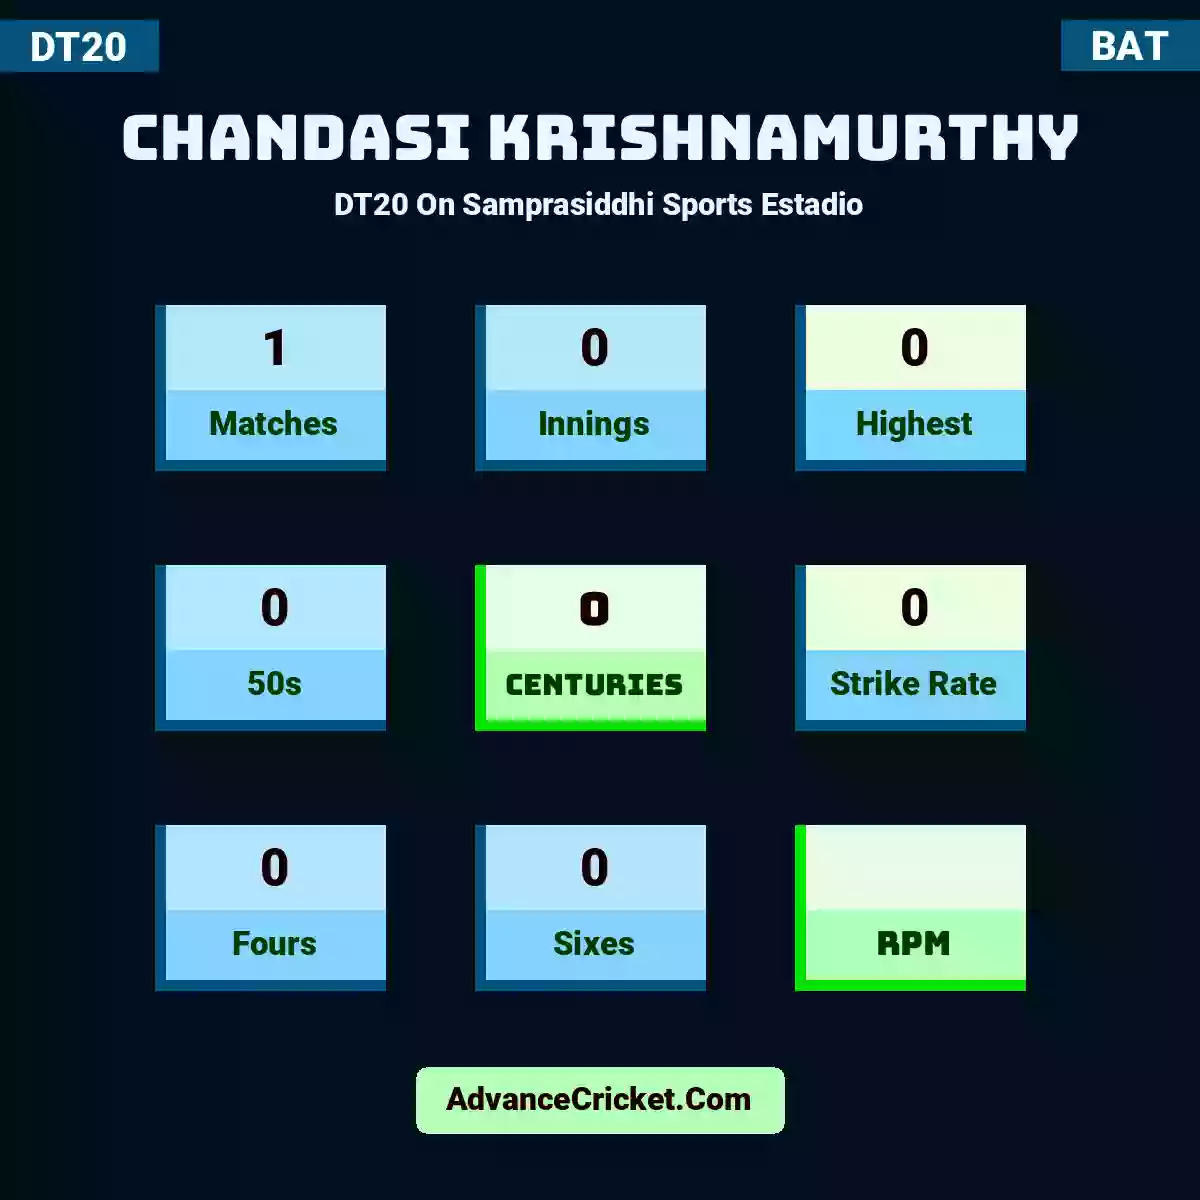 Chandasi Krishnamurthy DT20  On Samprasiddhi Sports Estadio, Chandasi Krishnamurthy played 1 matches, scored 0 runs as highest, 0 half-centuries, and 0 centuries, with a strike rate of 0. C.Krishnamurthy hit 0 fours and 0 sixes.